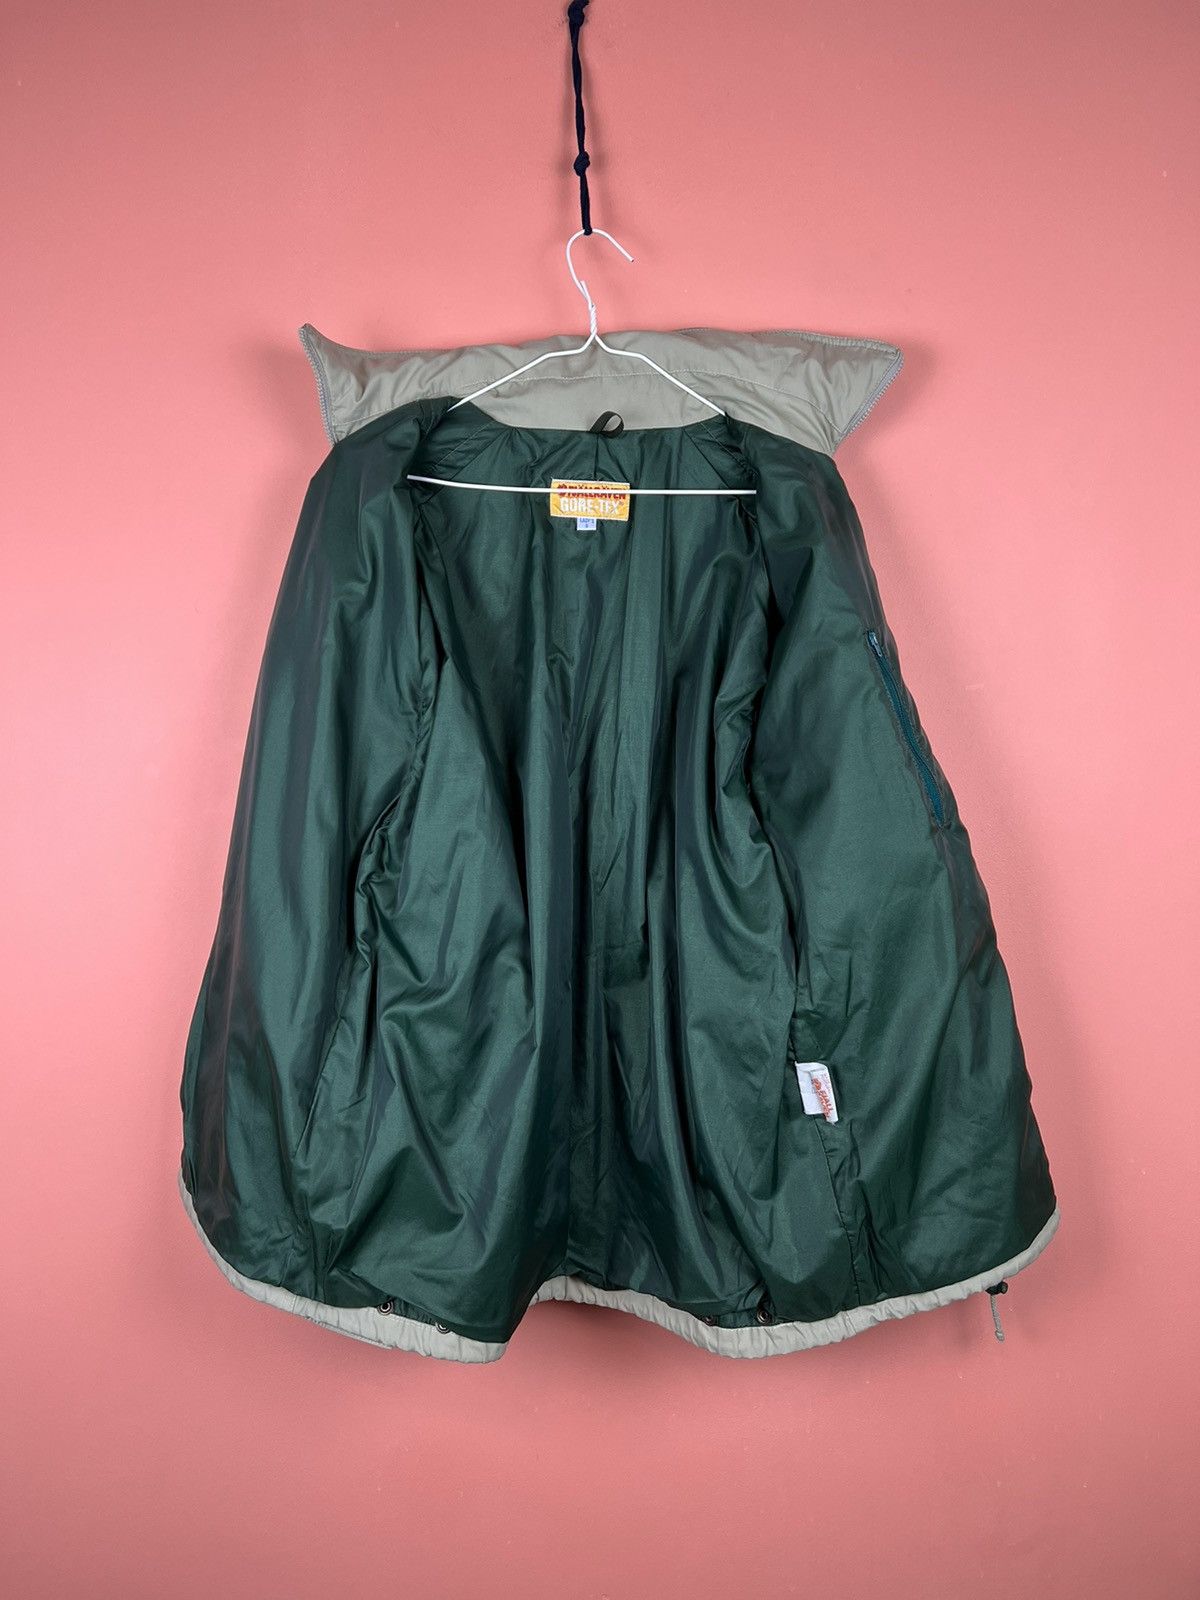 Vintage Fjallraven gore-tex women’s jacket outdoor 3/4 sleeve Size S / US 4 / IT 40 - 6 Thumbnail